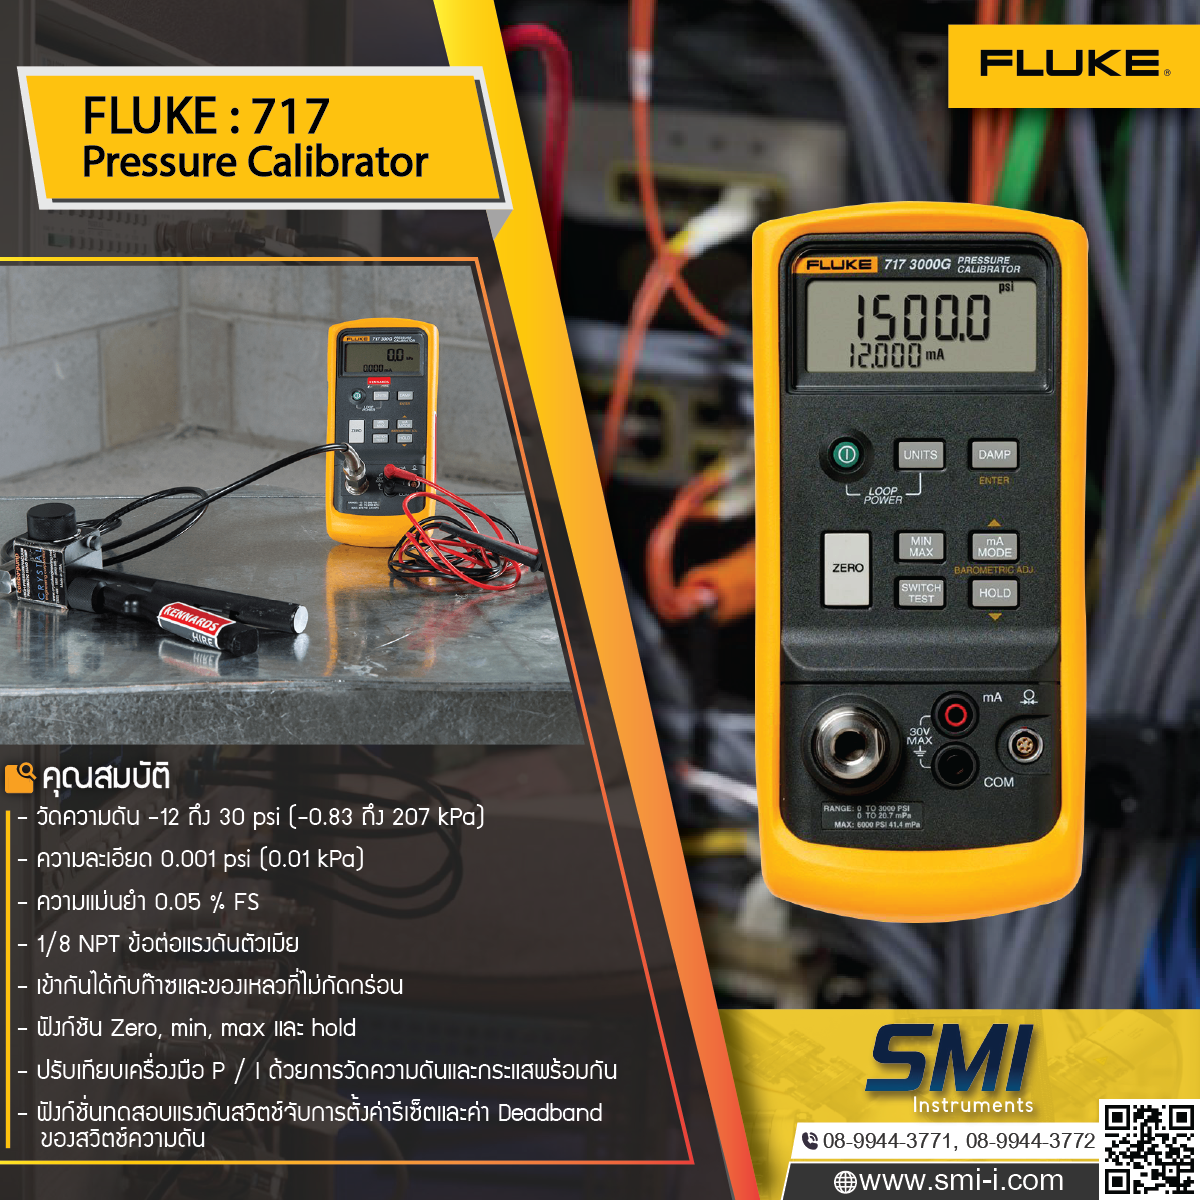 SMI info FLUKE 717 Pressure Calibrator